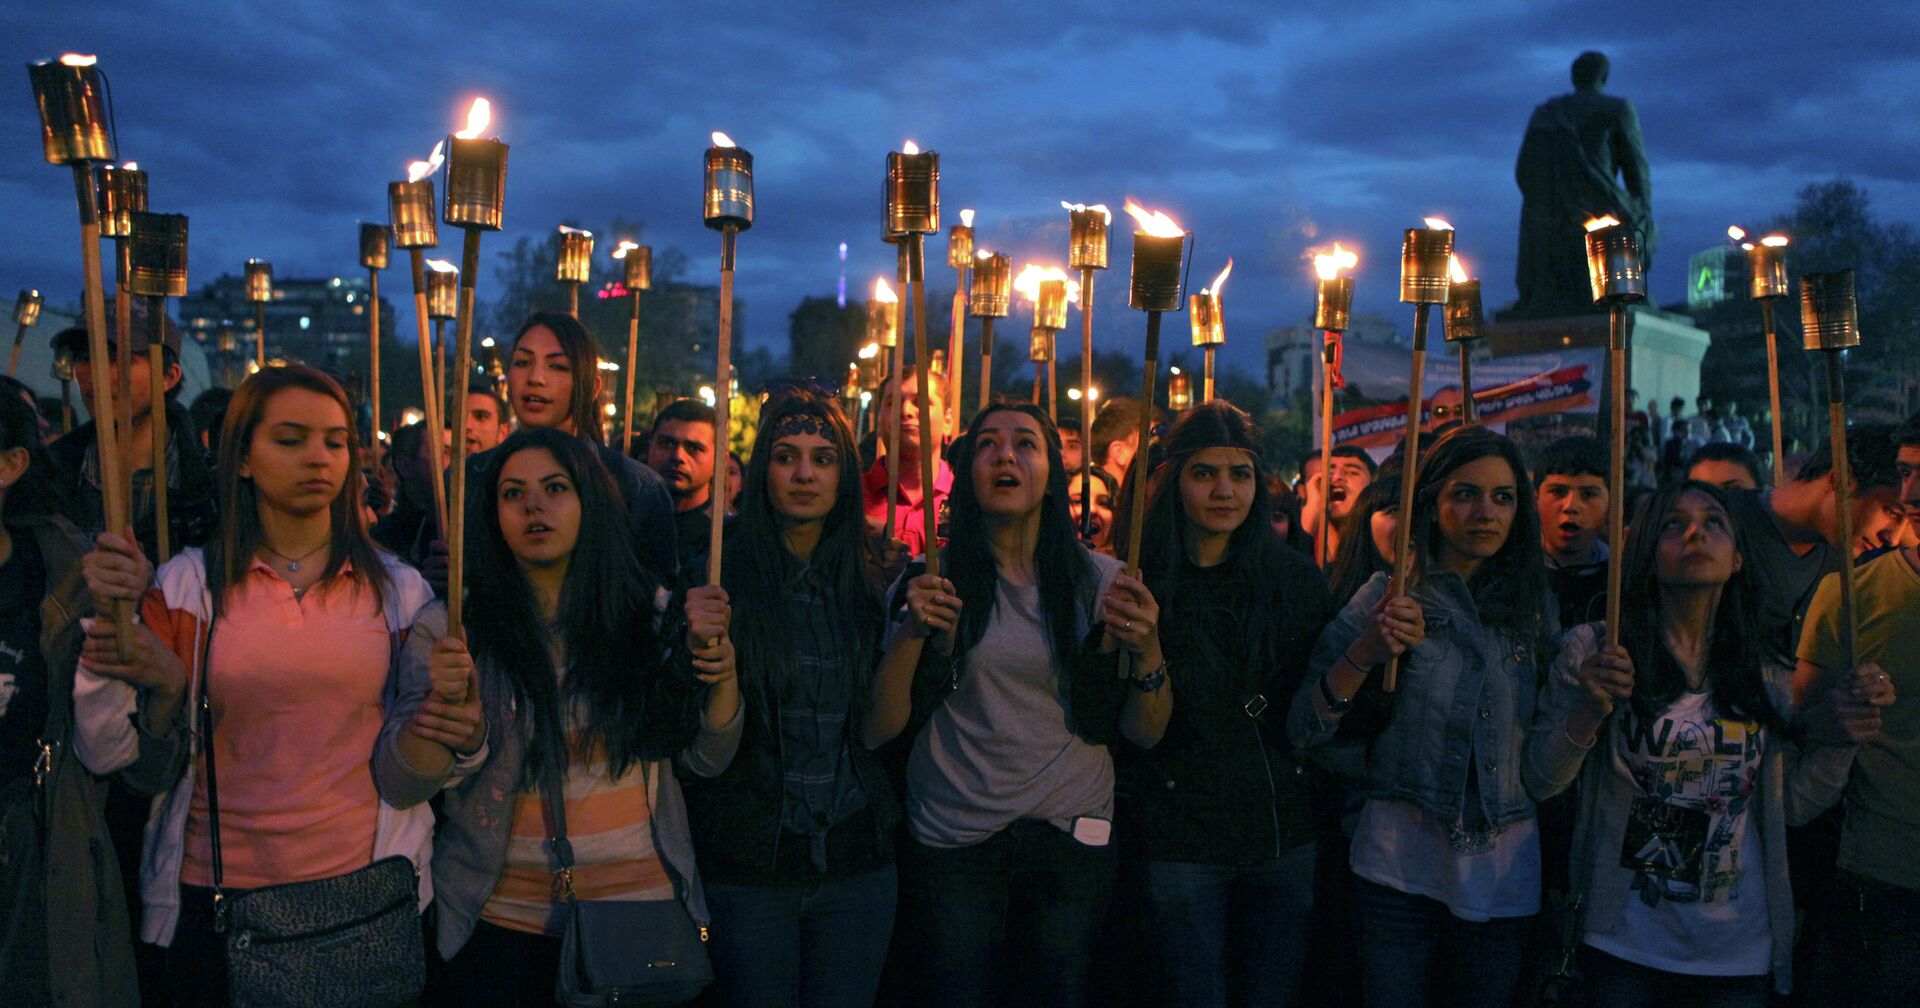 Шествие памяти жертв геноцида армян 1915 года - ИноСМИ, 1920, 17.05.2021